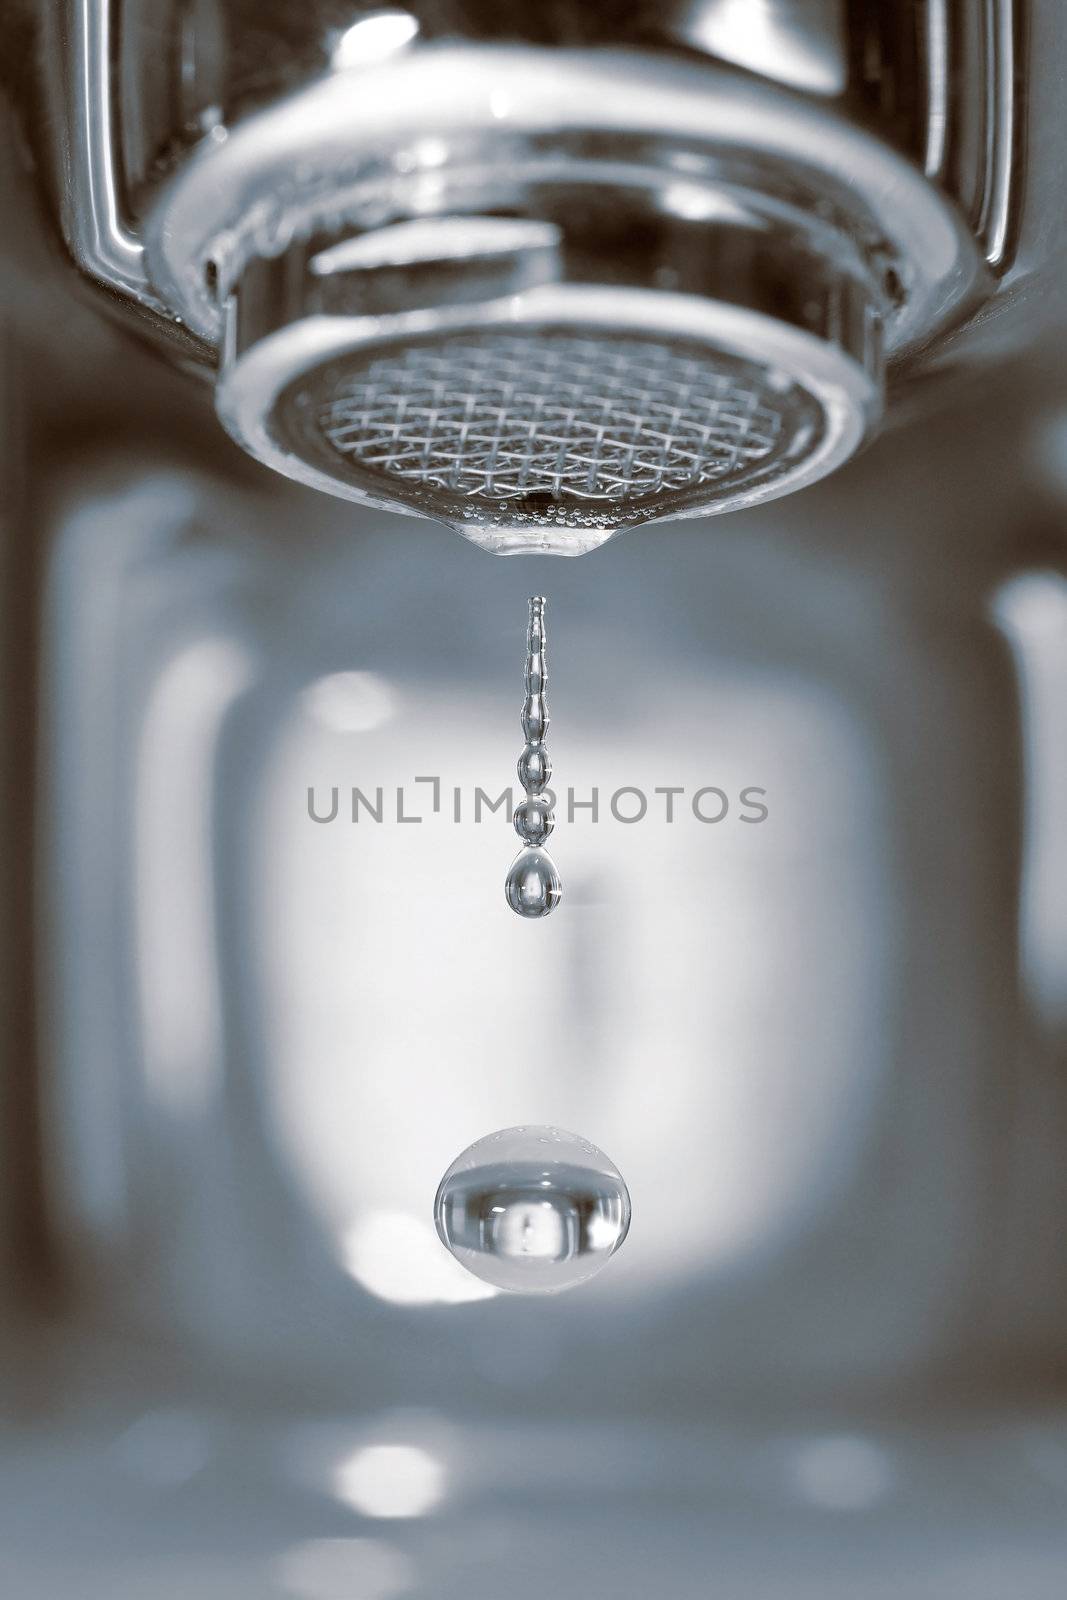 Water drop falling form a faucet in a bathroom, low depth of field